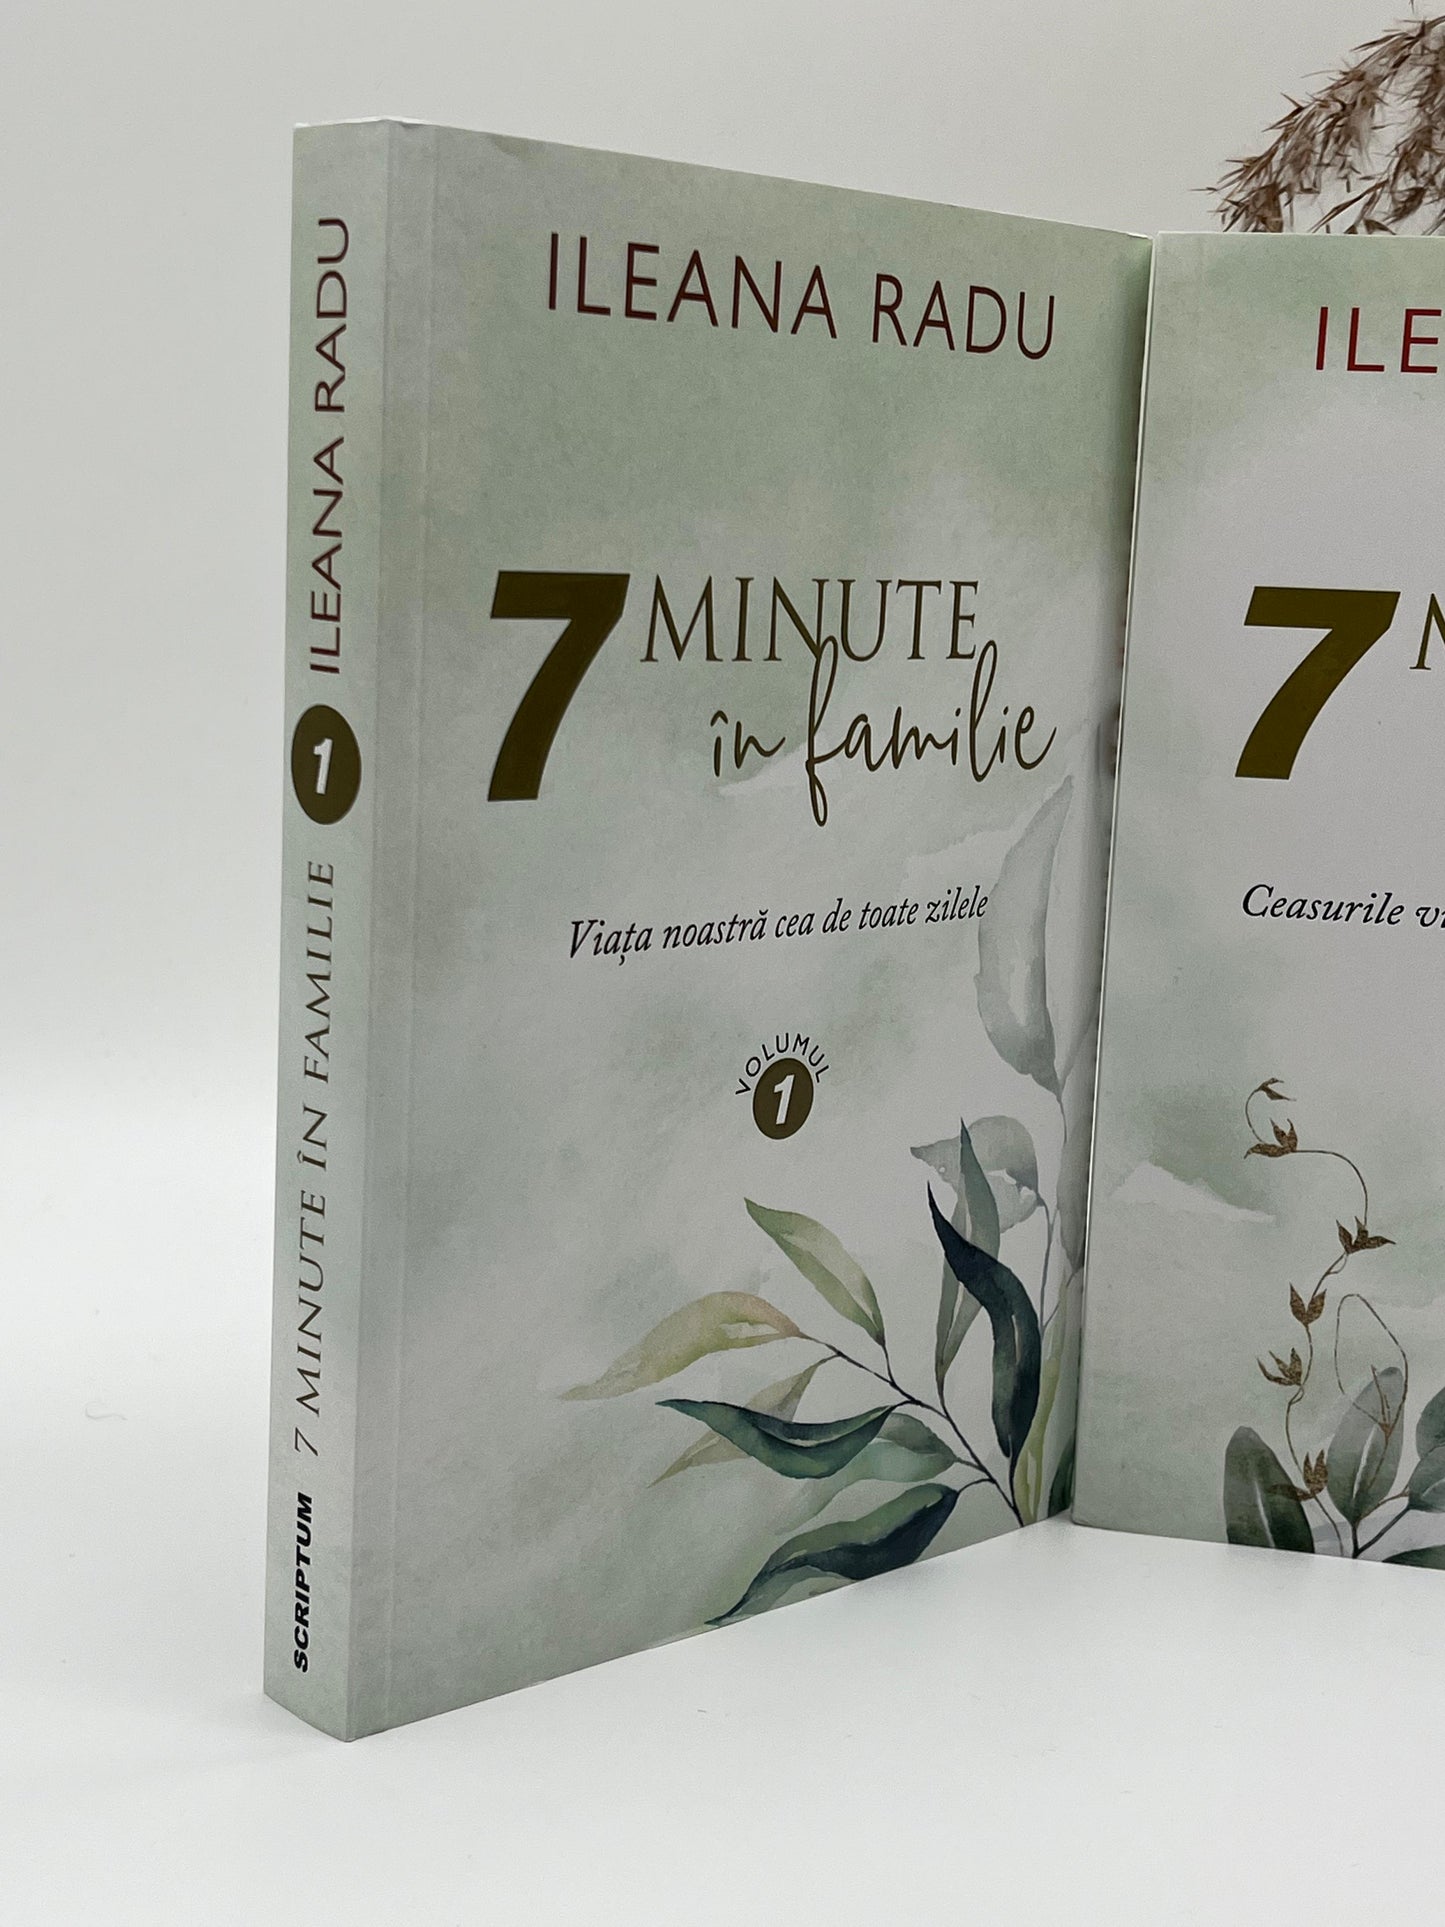 7 minute in familie (pachet 1+2) - 
Ileana Radu